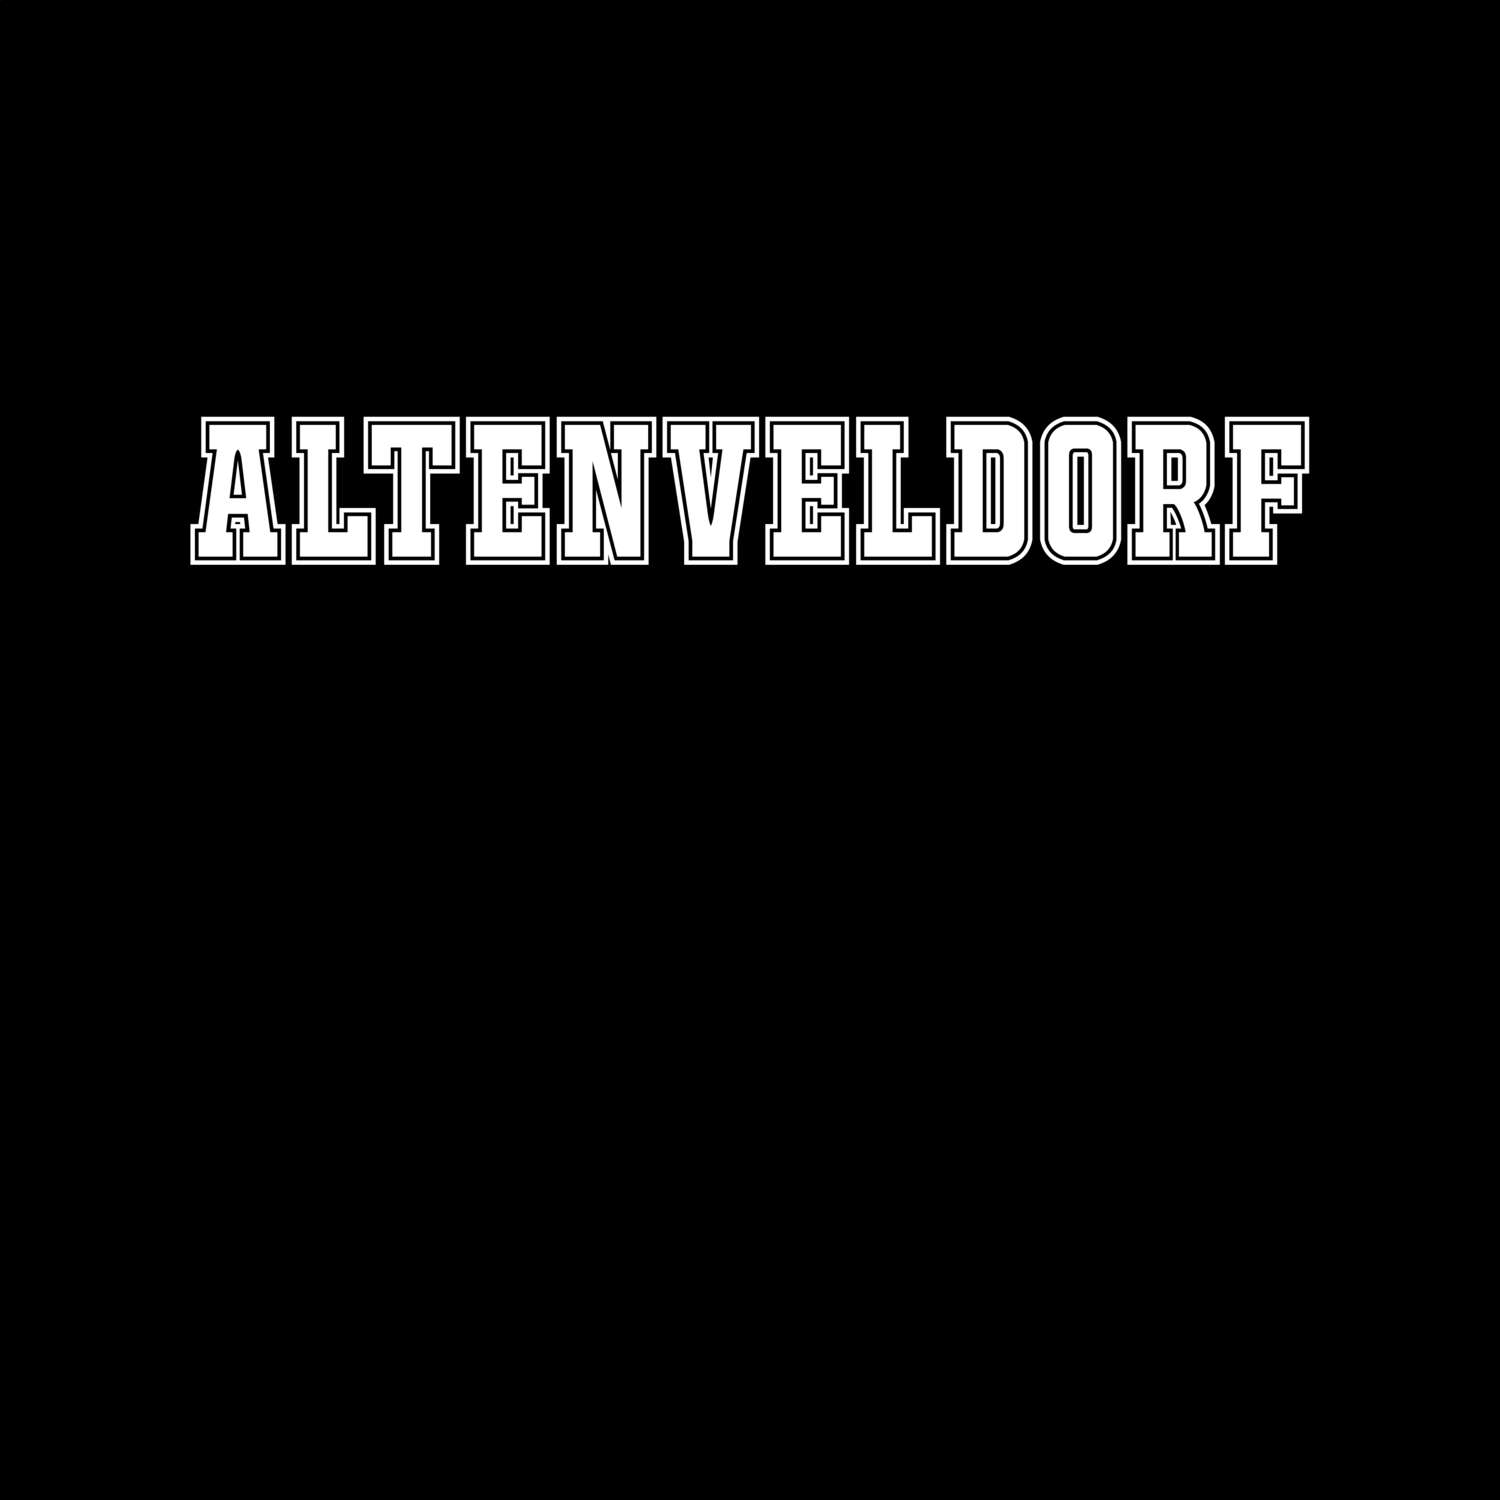 Altenveldorf T-Shirt »Classic«